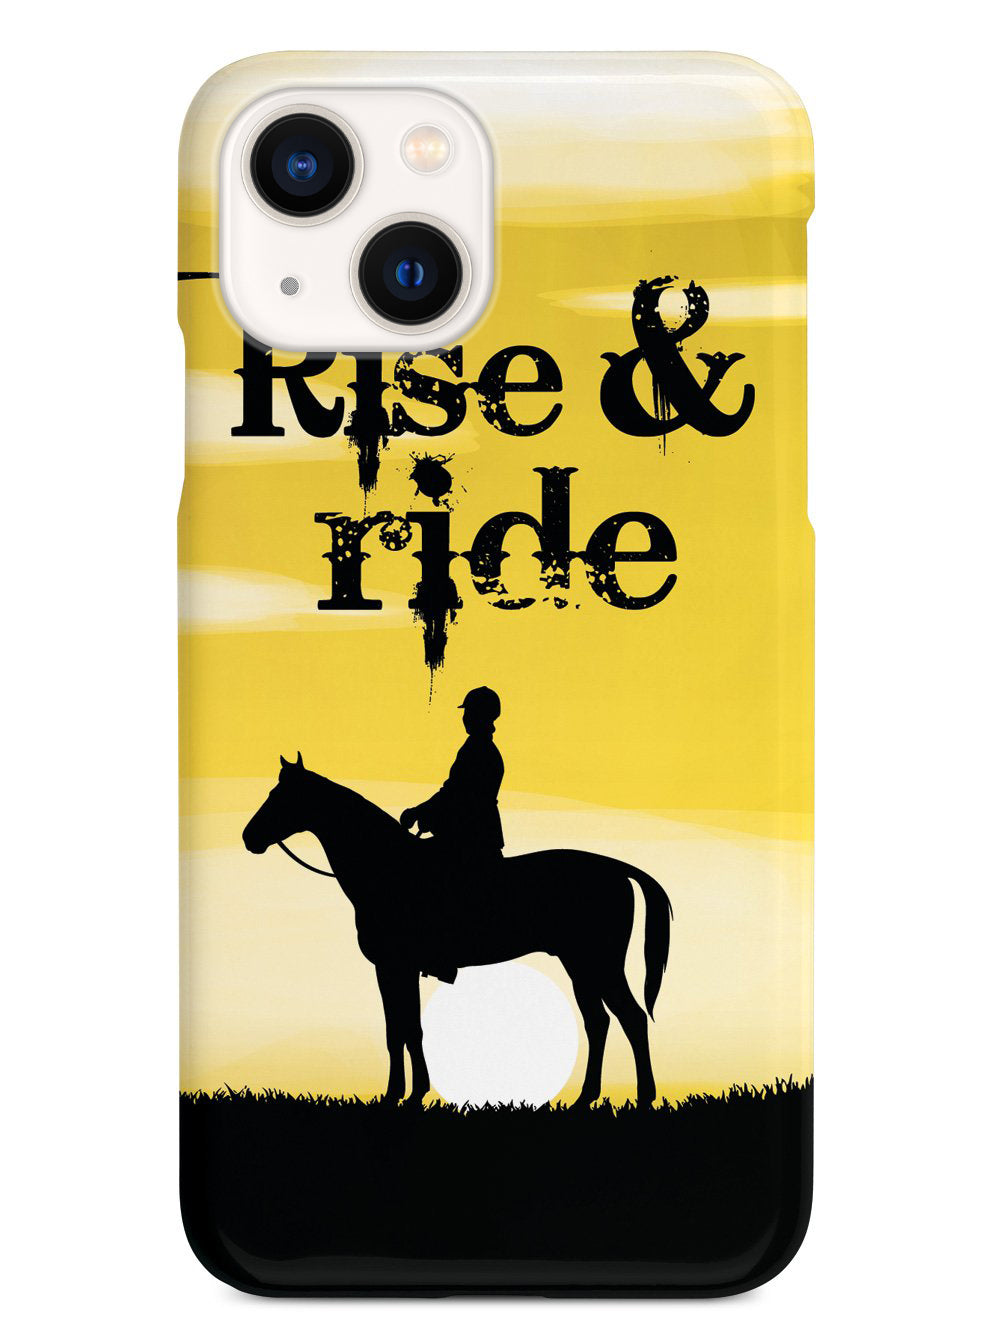 Rise & Ride - Horse Riding Equestrian Case